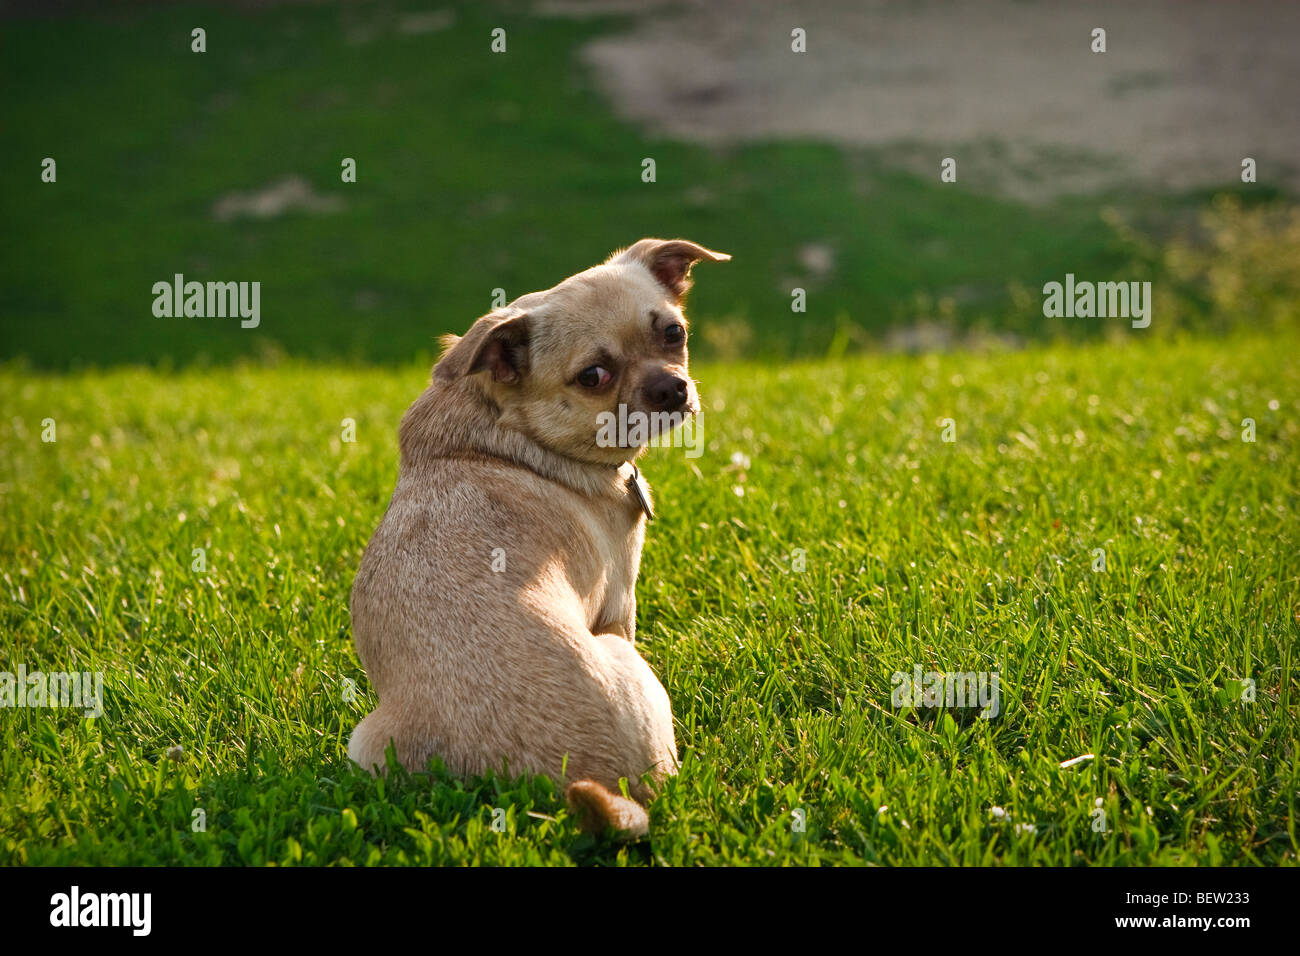 Mops-Chihuahua Mischling Hund sitzen auf dem Rasen Stockfotografie - Alamy